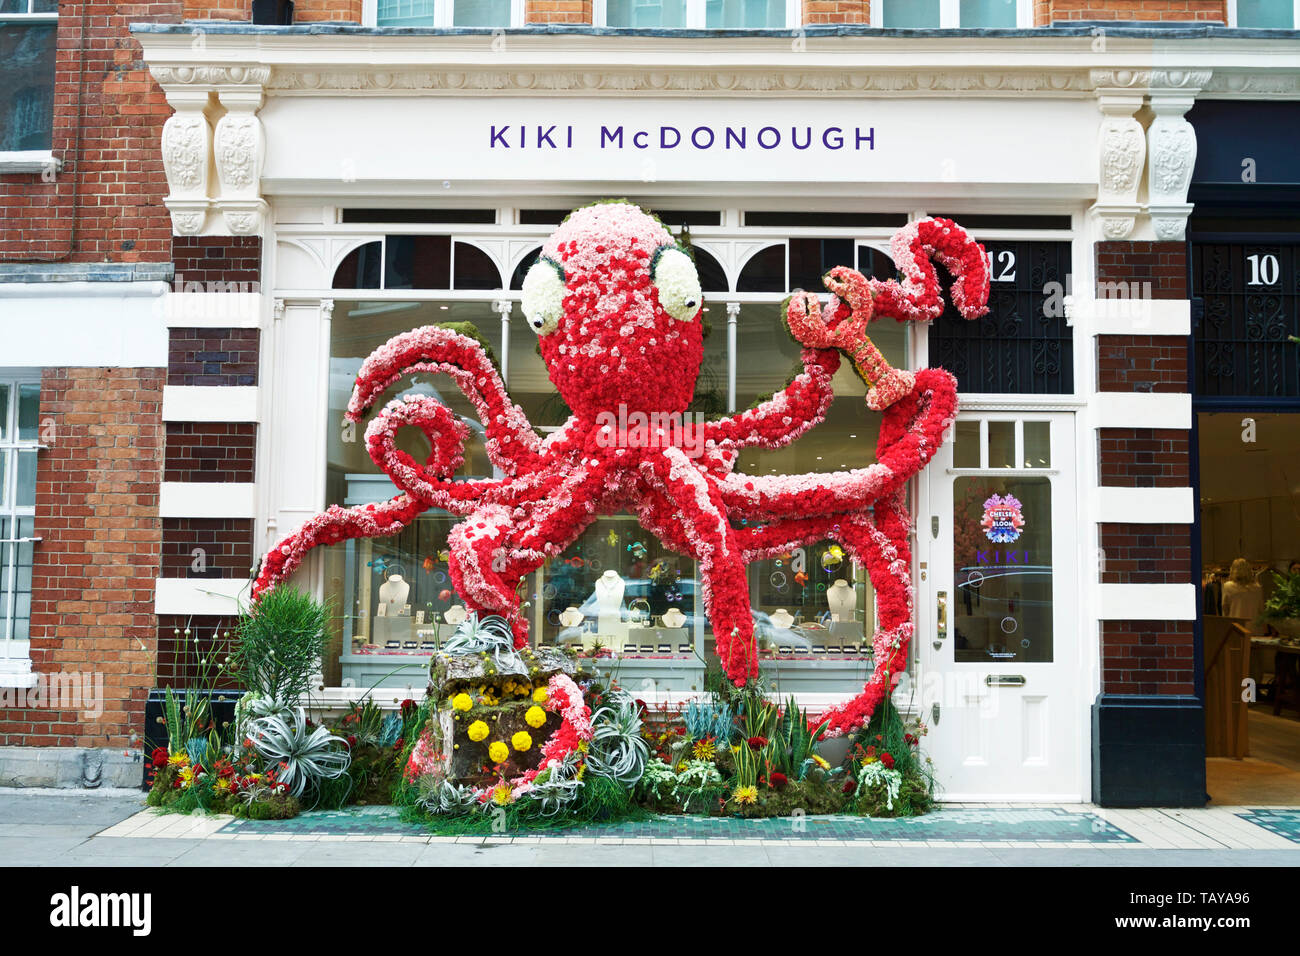 Chelsea in Bloom London, UK. Octopus floral sculpture outside Kiki McDonough, Symons Street, Chelsea. Royal borough of Kensington and Chelsea. Stock Photo